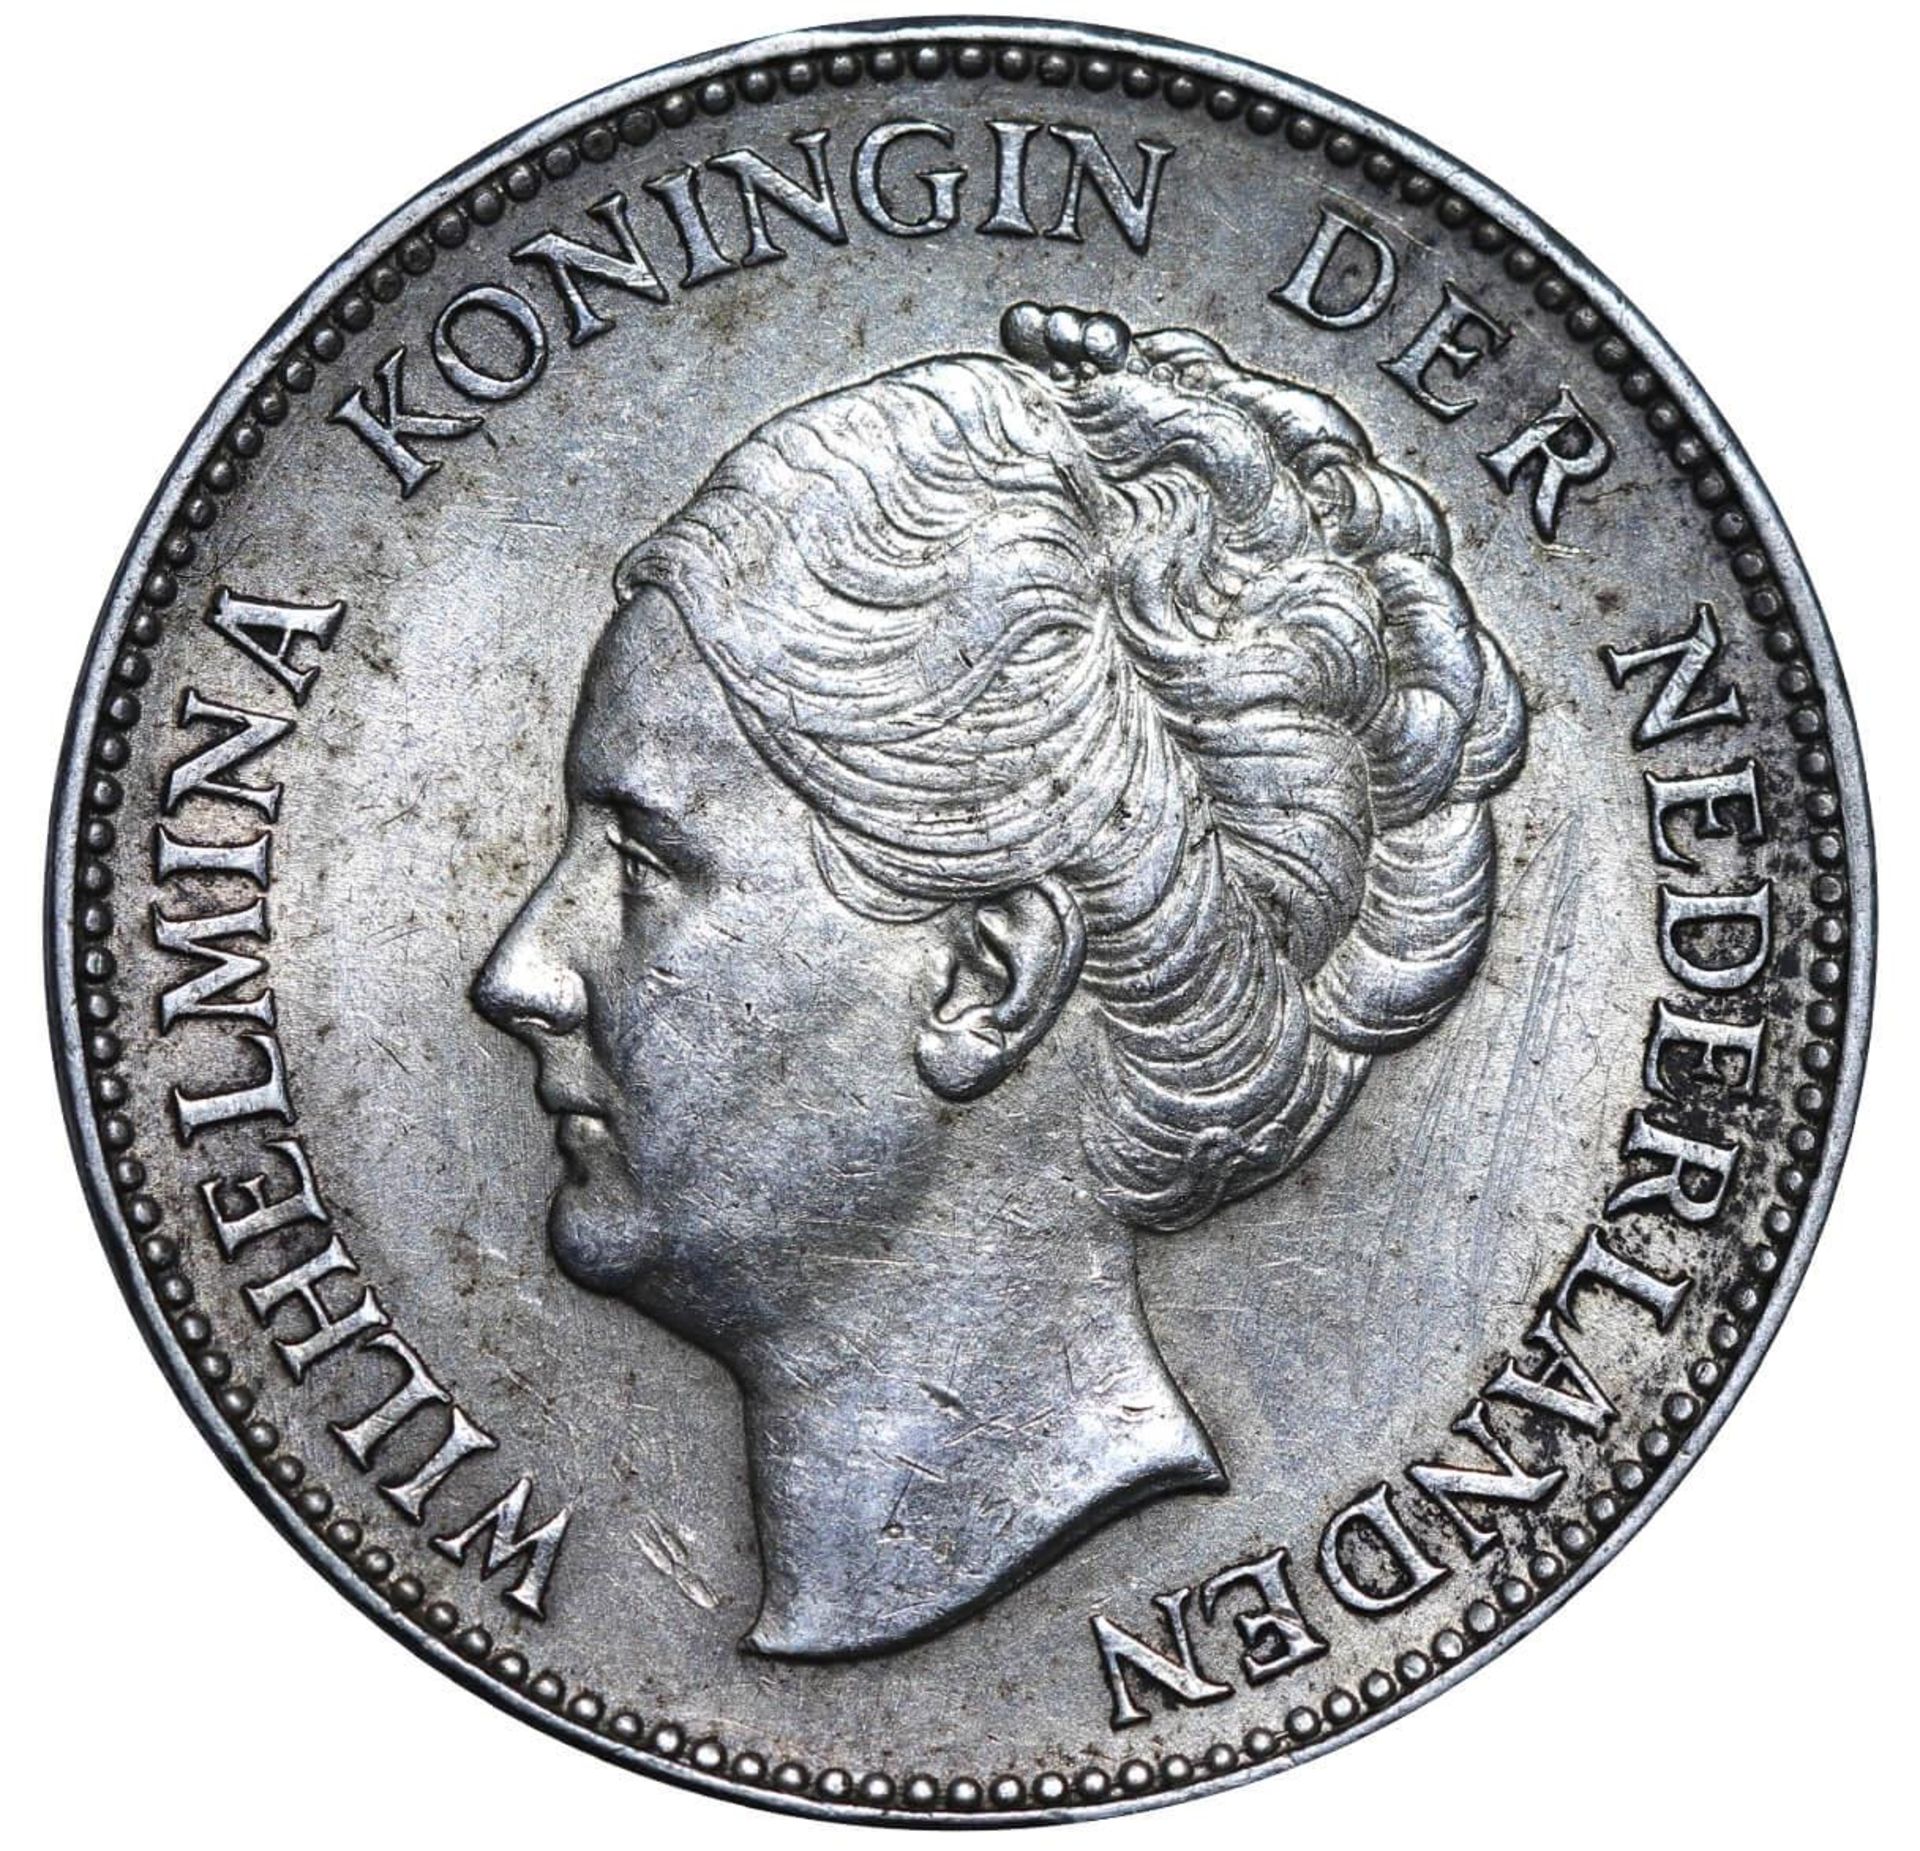 Netherlands, 1 Gulden, 1940 year - Image 2 of 3